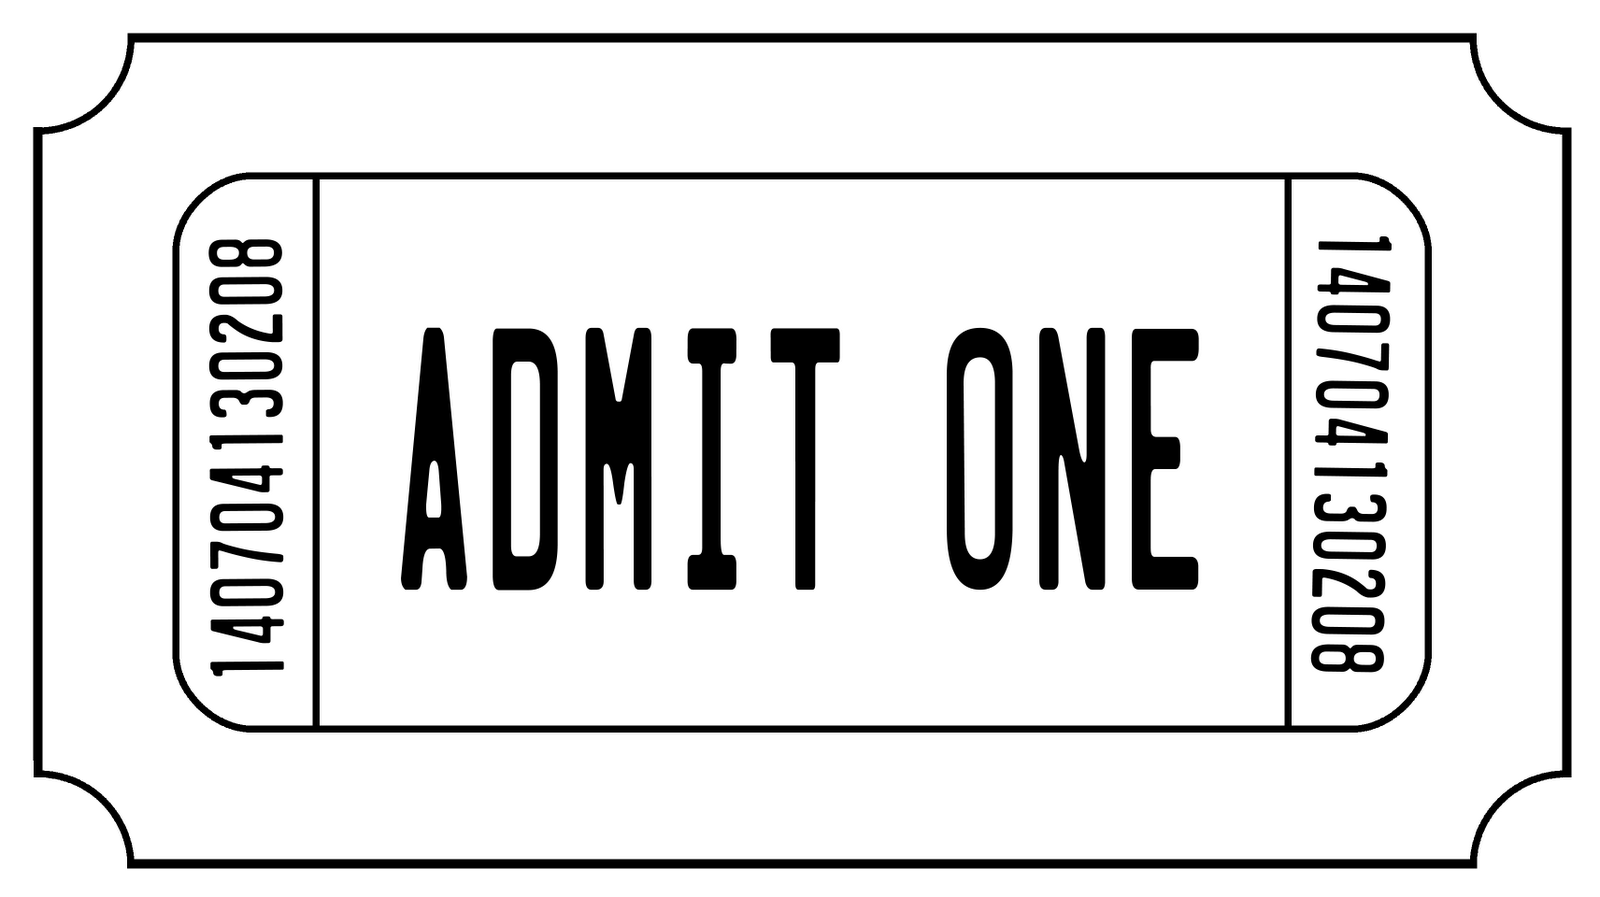 Movie Admission Ticket Template